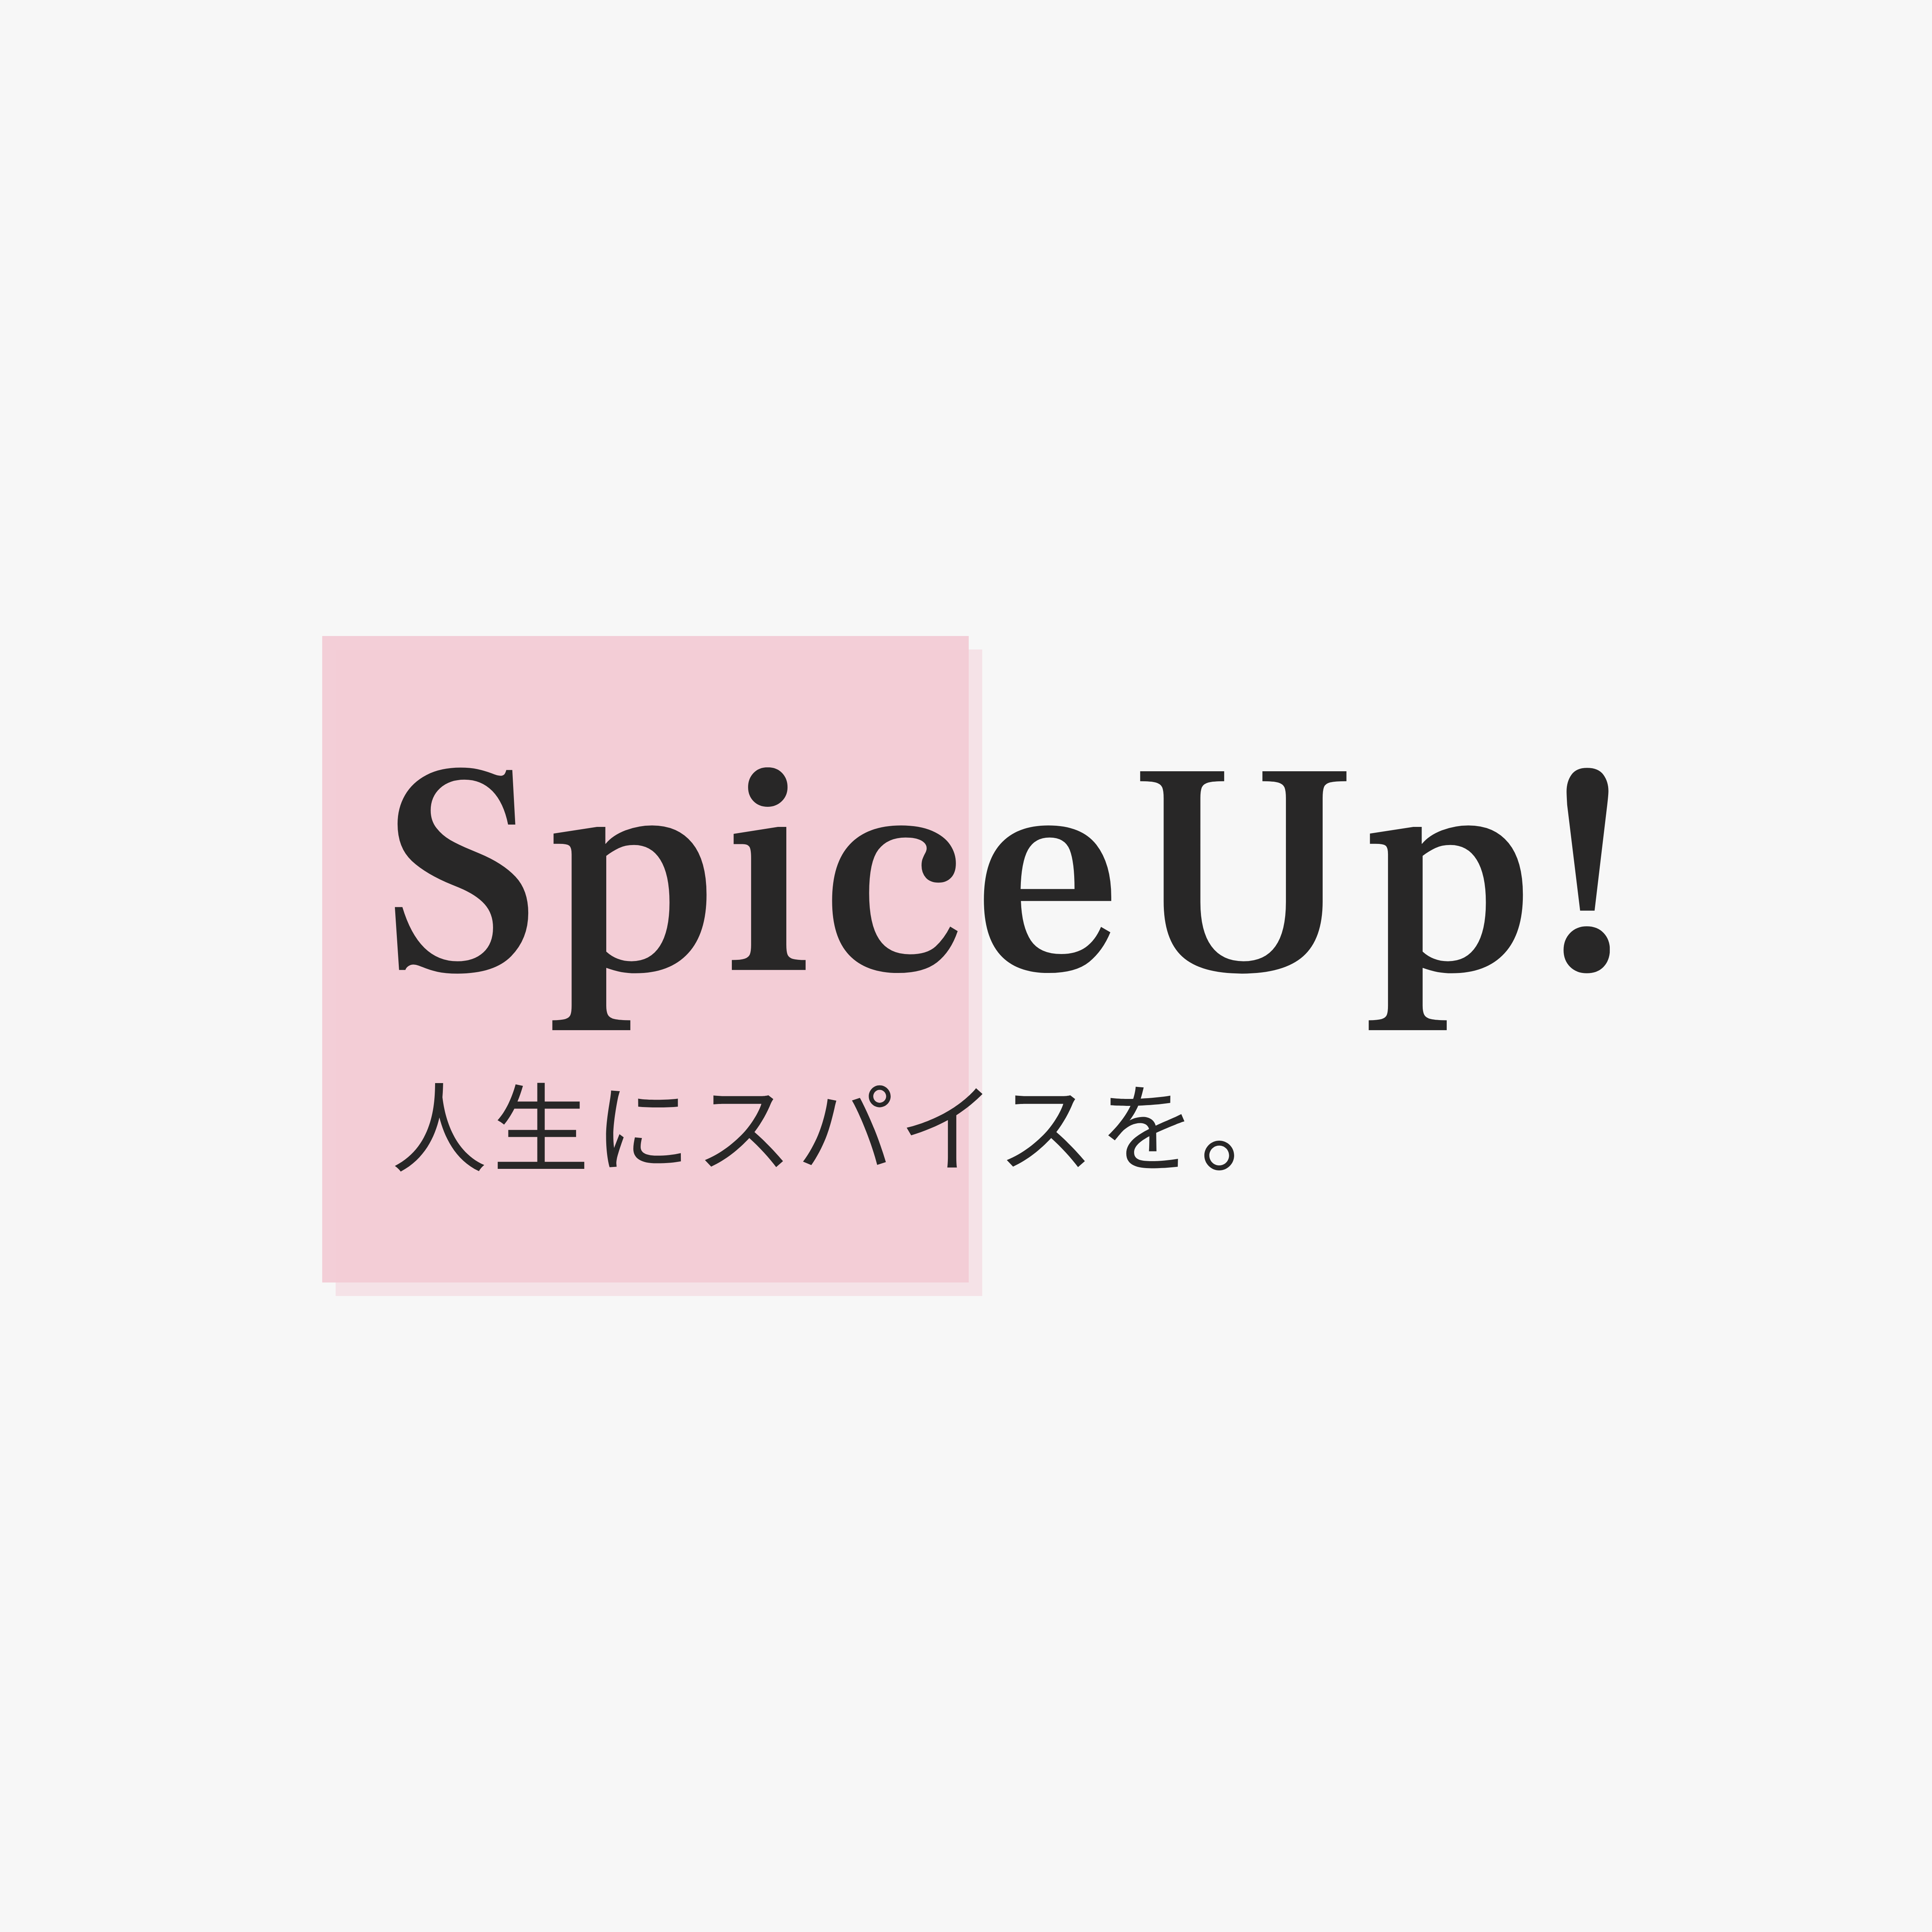 SpiceUp!